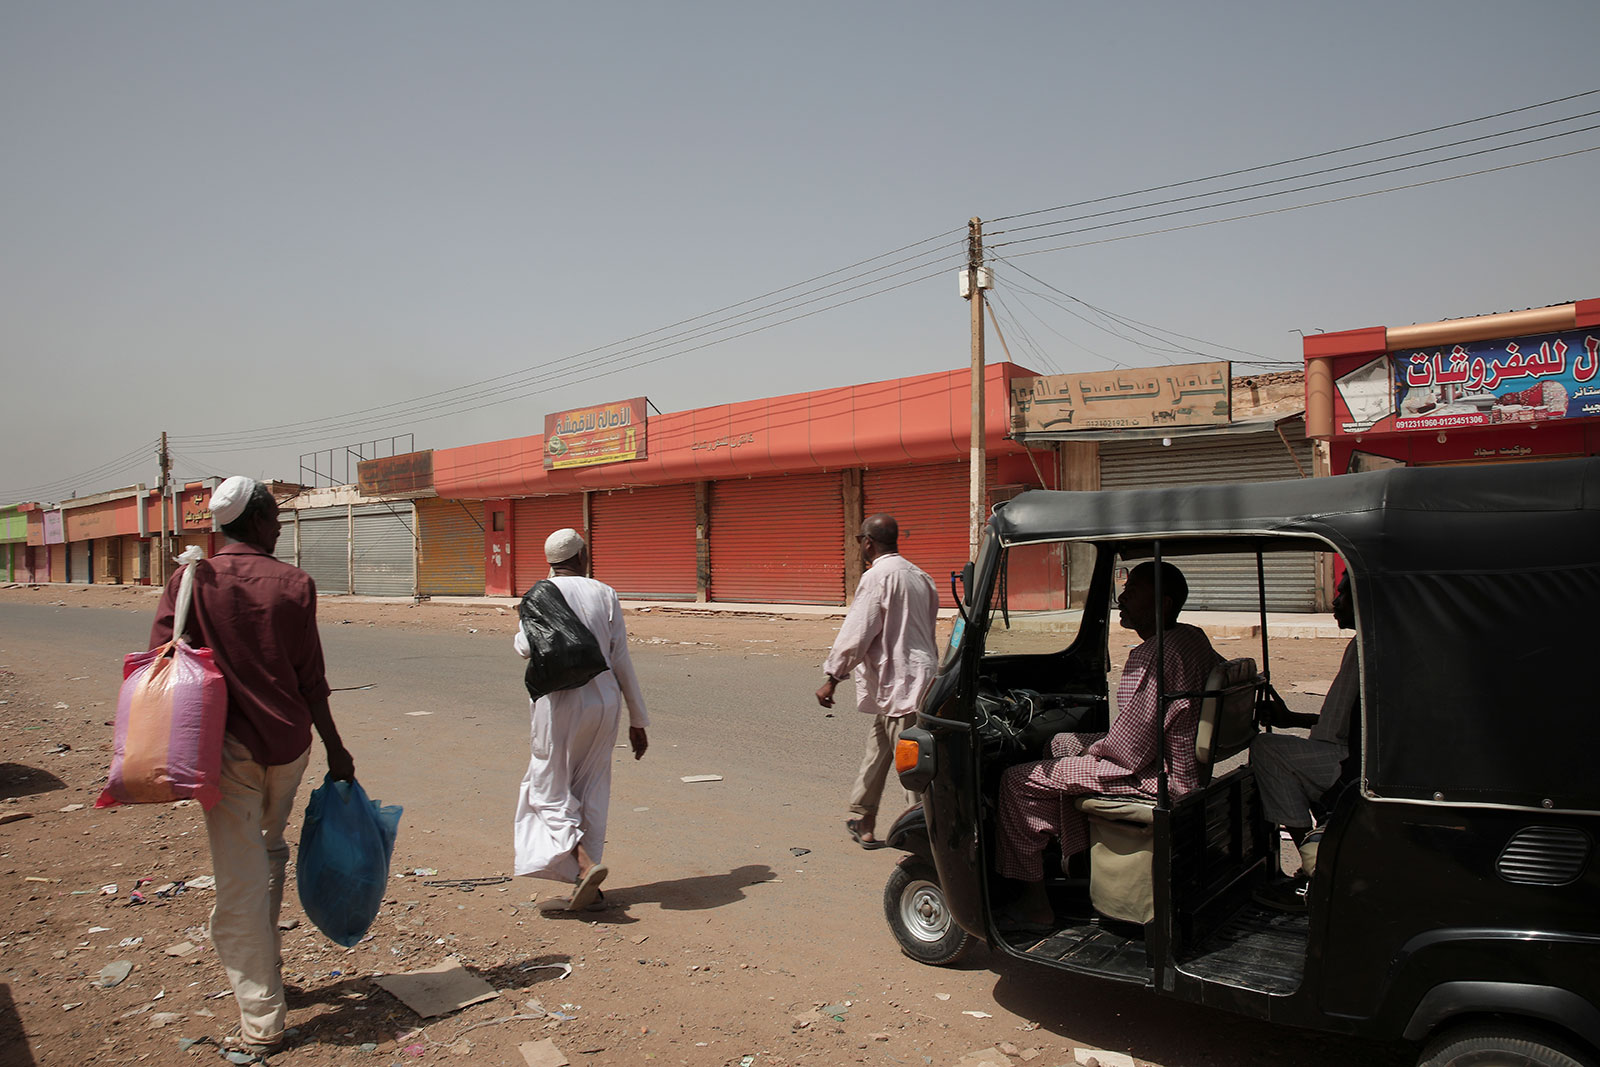 People walk past shuttered shops in Khartoum, Sudan, on Monday, April 17.